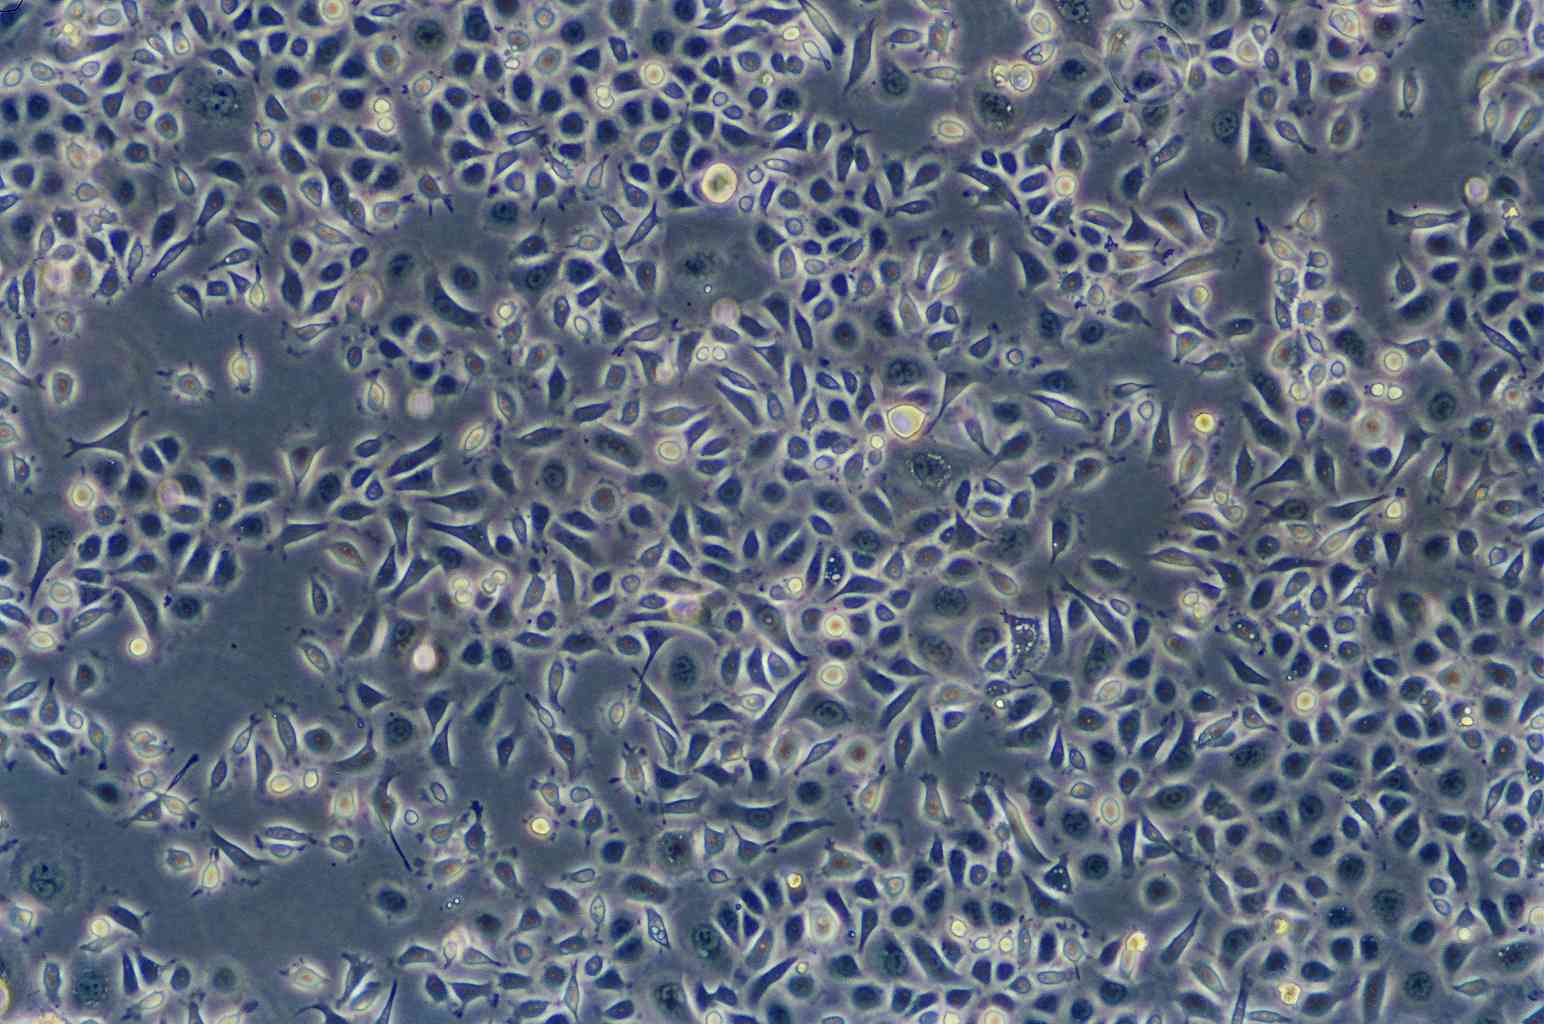 MDA-MB-468 epithelioid cells人乳腺癌细胞系,MDA-MB-468 epithelioid cells